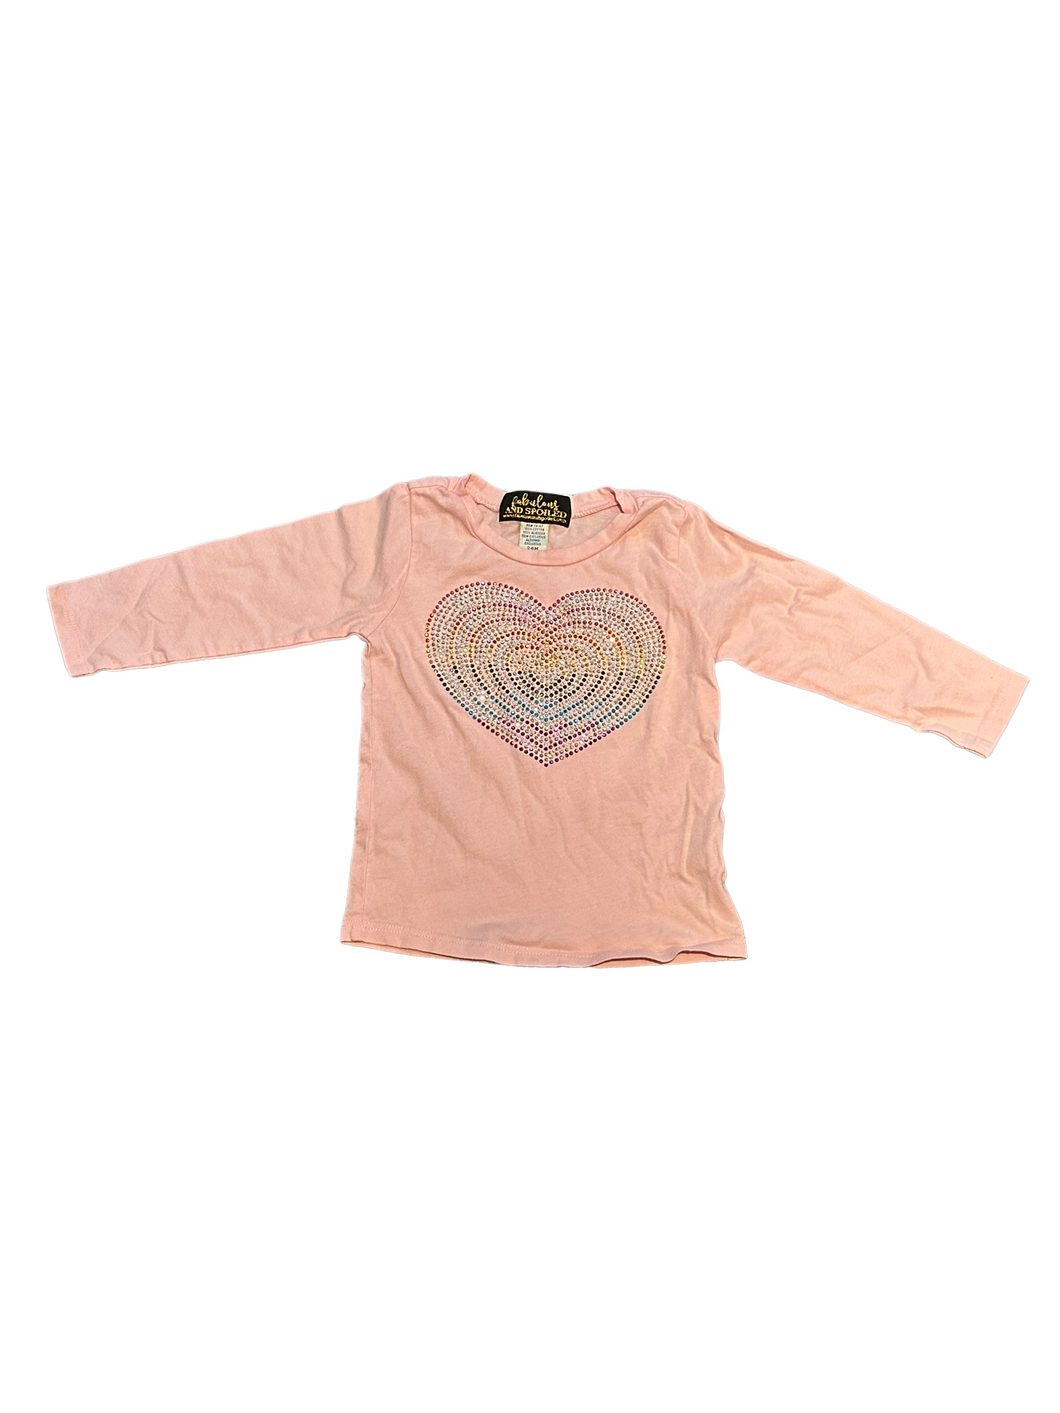 CLEARANCE -Rainbow Heart Pink Long Sleeve Shirt  - Size 24 Months